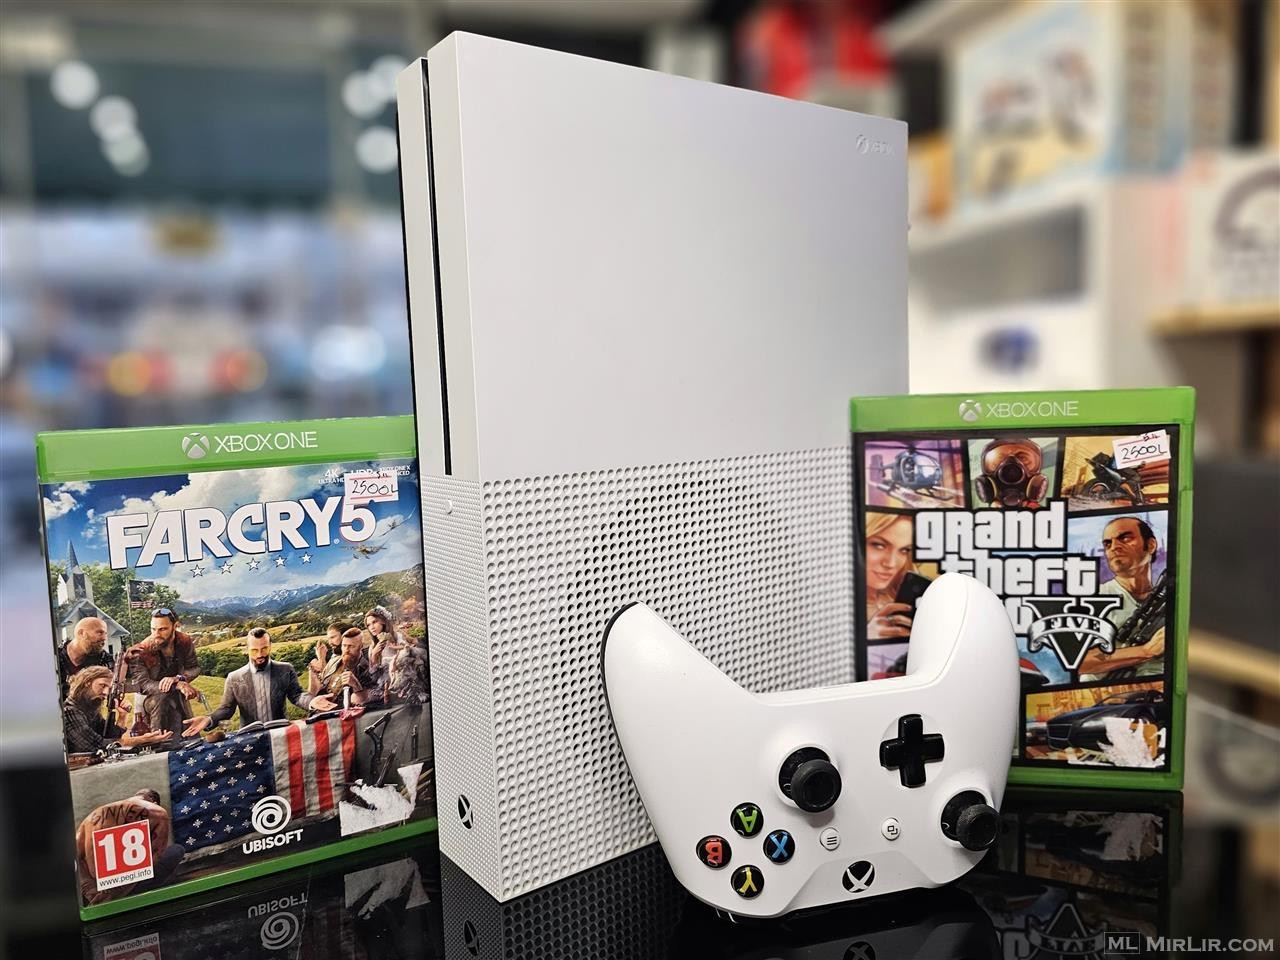 Xbox One S me Leve, Gta 5, Far Cry 5 dhe garanci